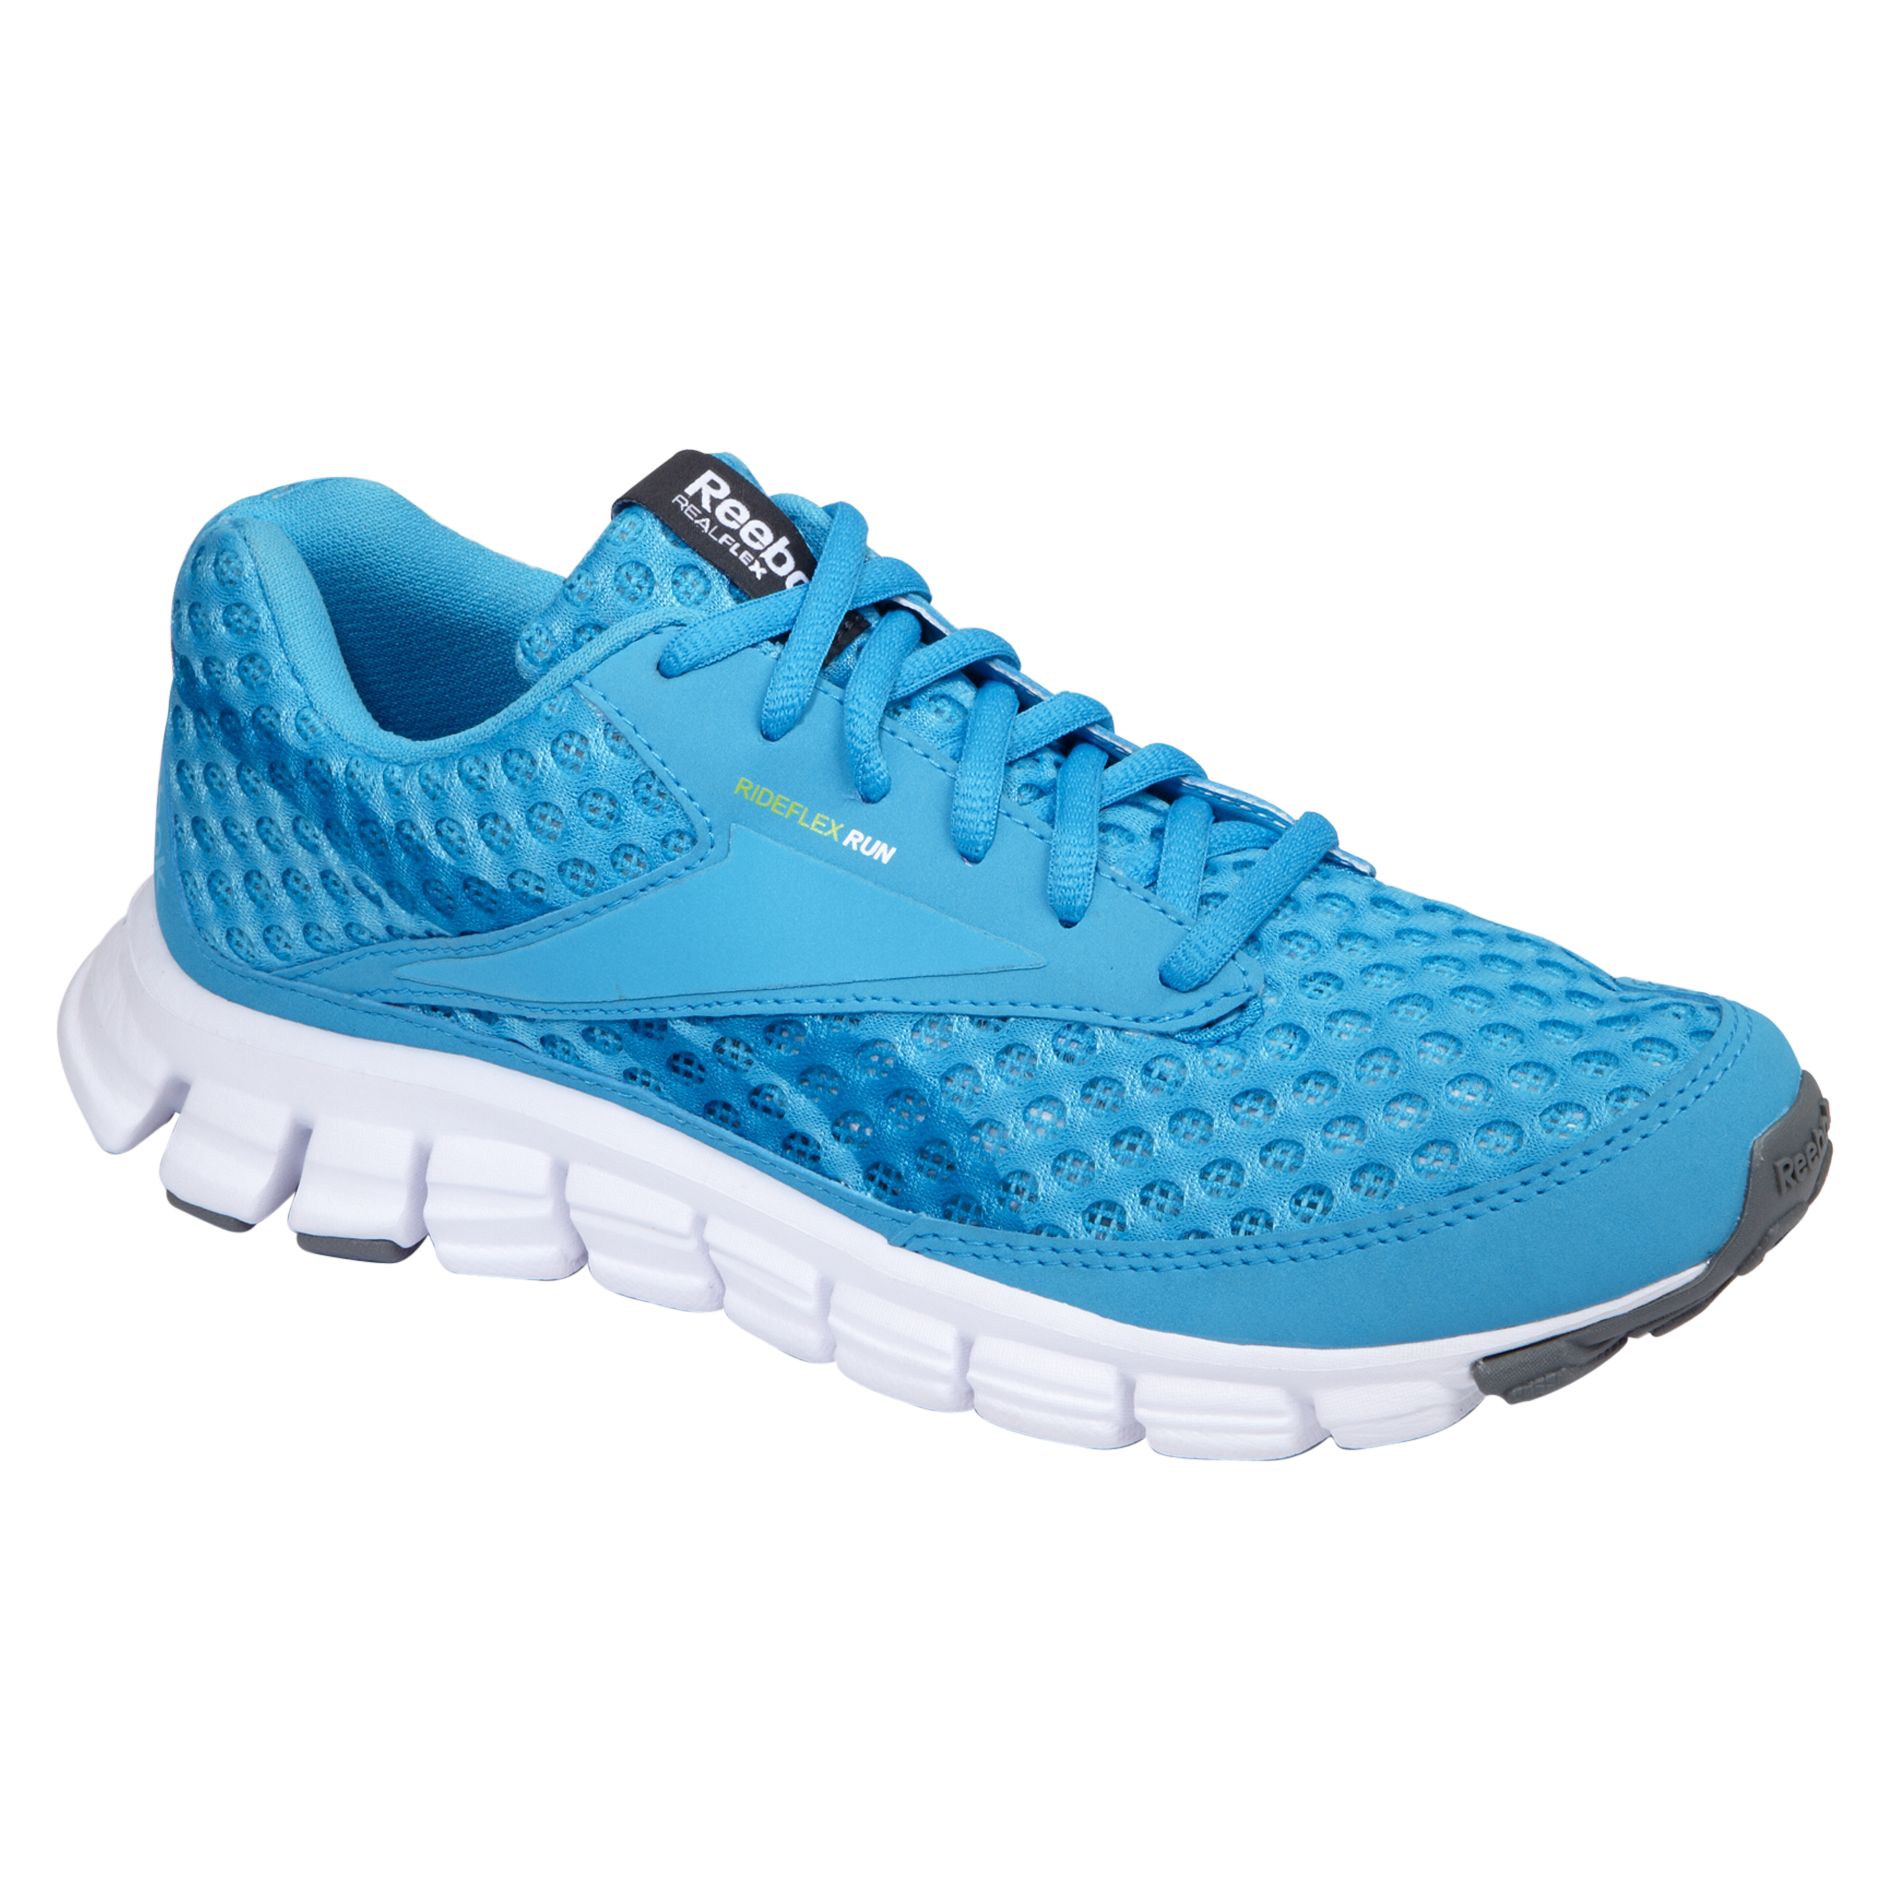 Reebok Women's SmoothFlex CushRun Running Athletic Shoe - Blue/White